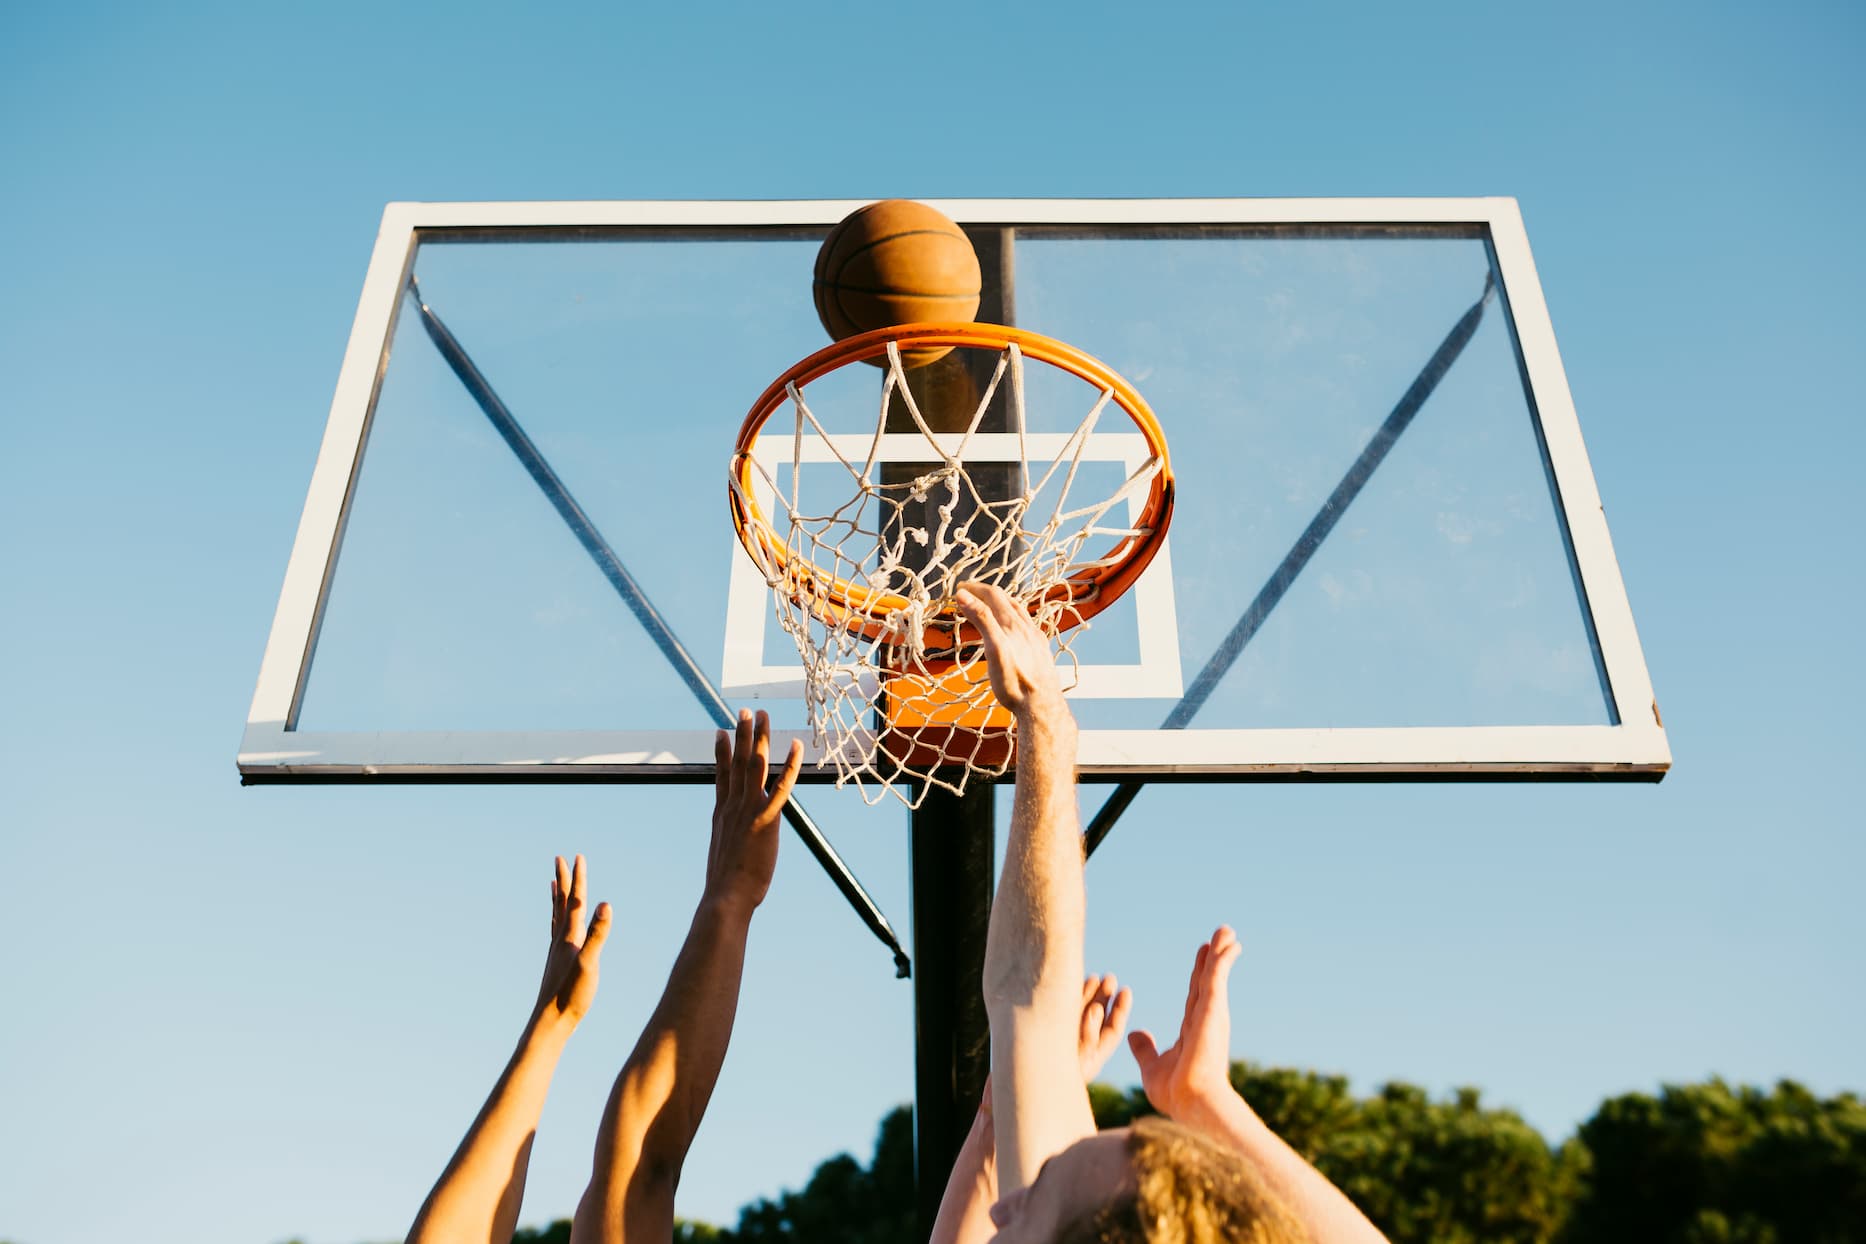 hands reaching towards a basketball hoop and ball